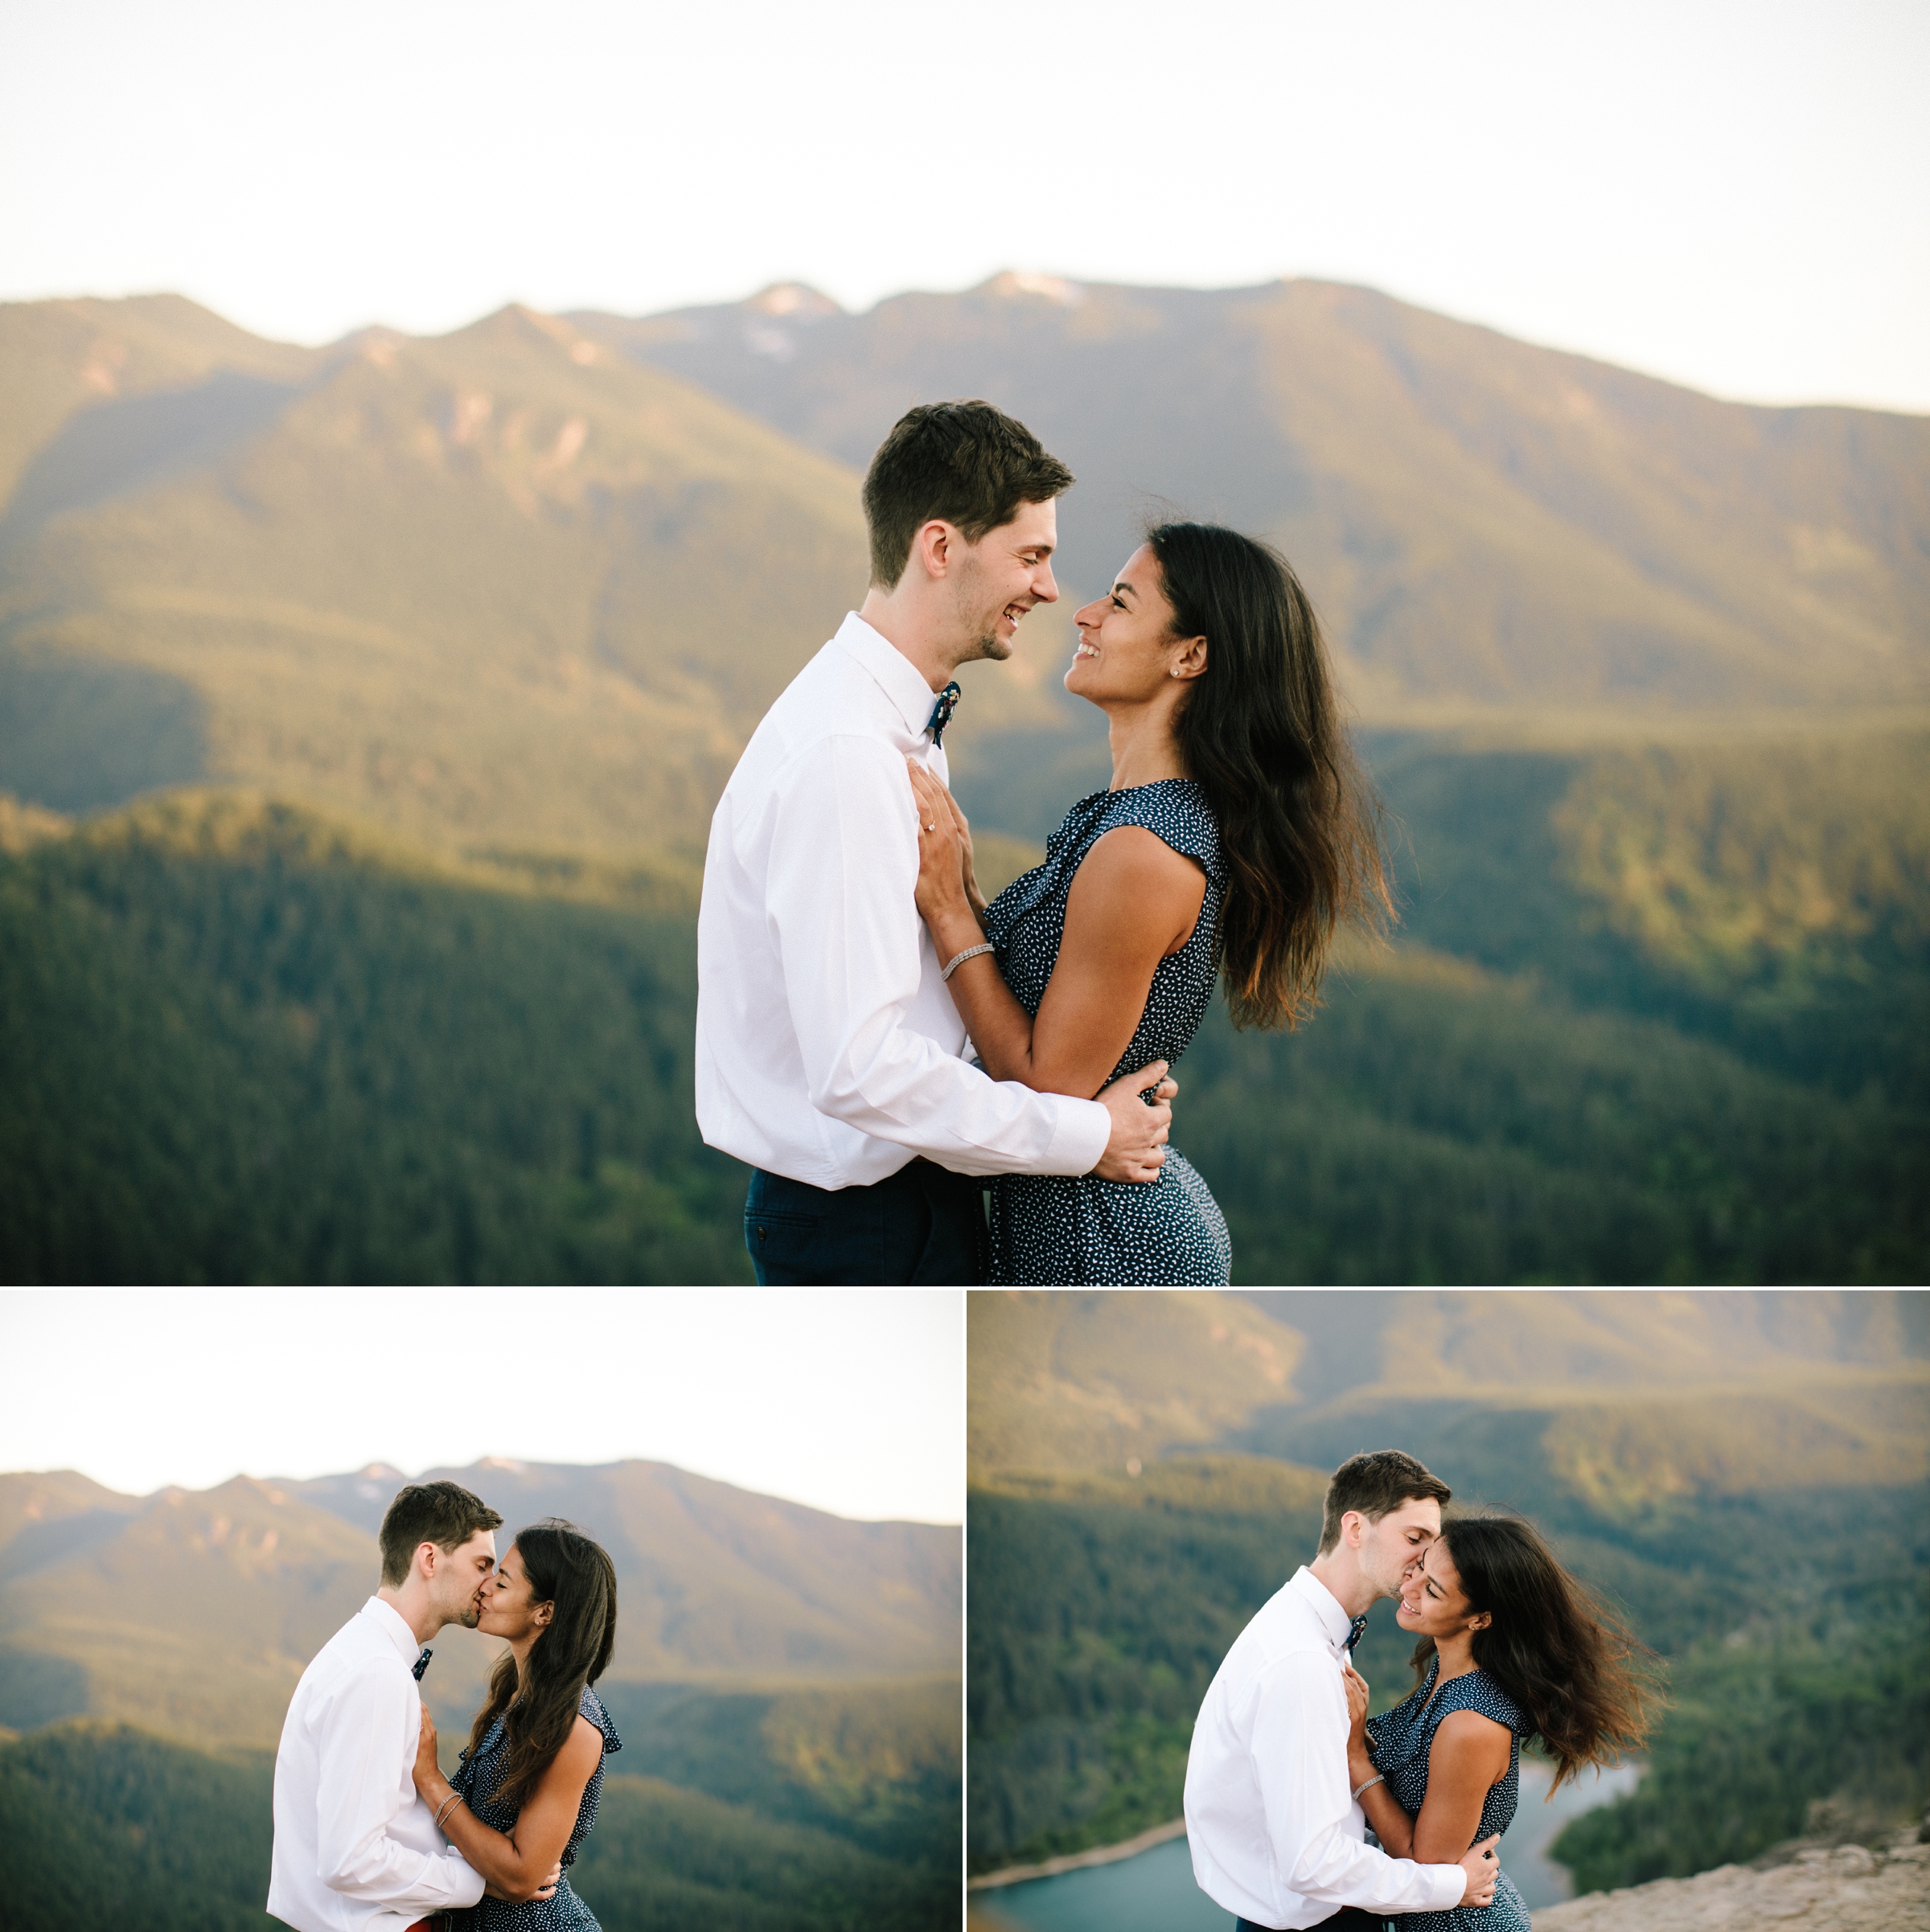 adventure-mountain-top-elopement-photographer-pnw-seattle-washington-wedding-engagement-hike-photography-catie-bergman_0026.jpg